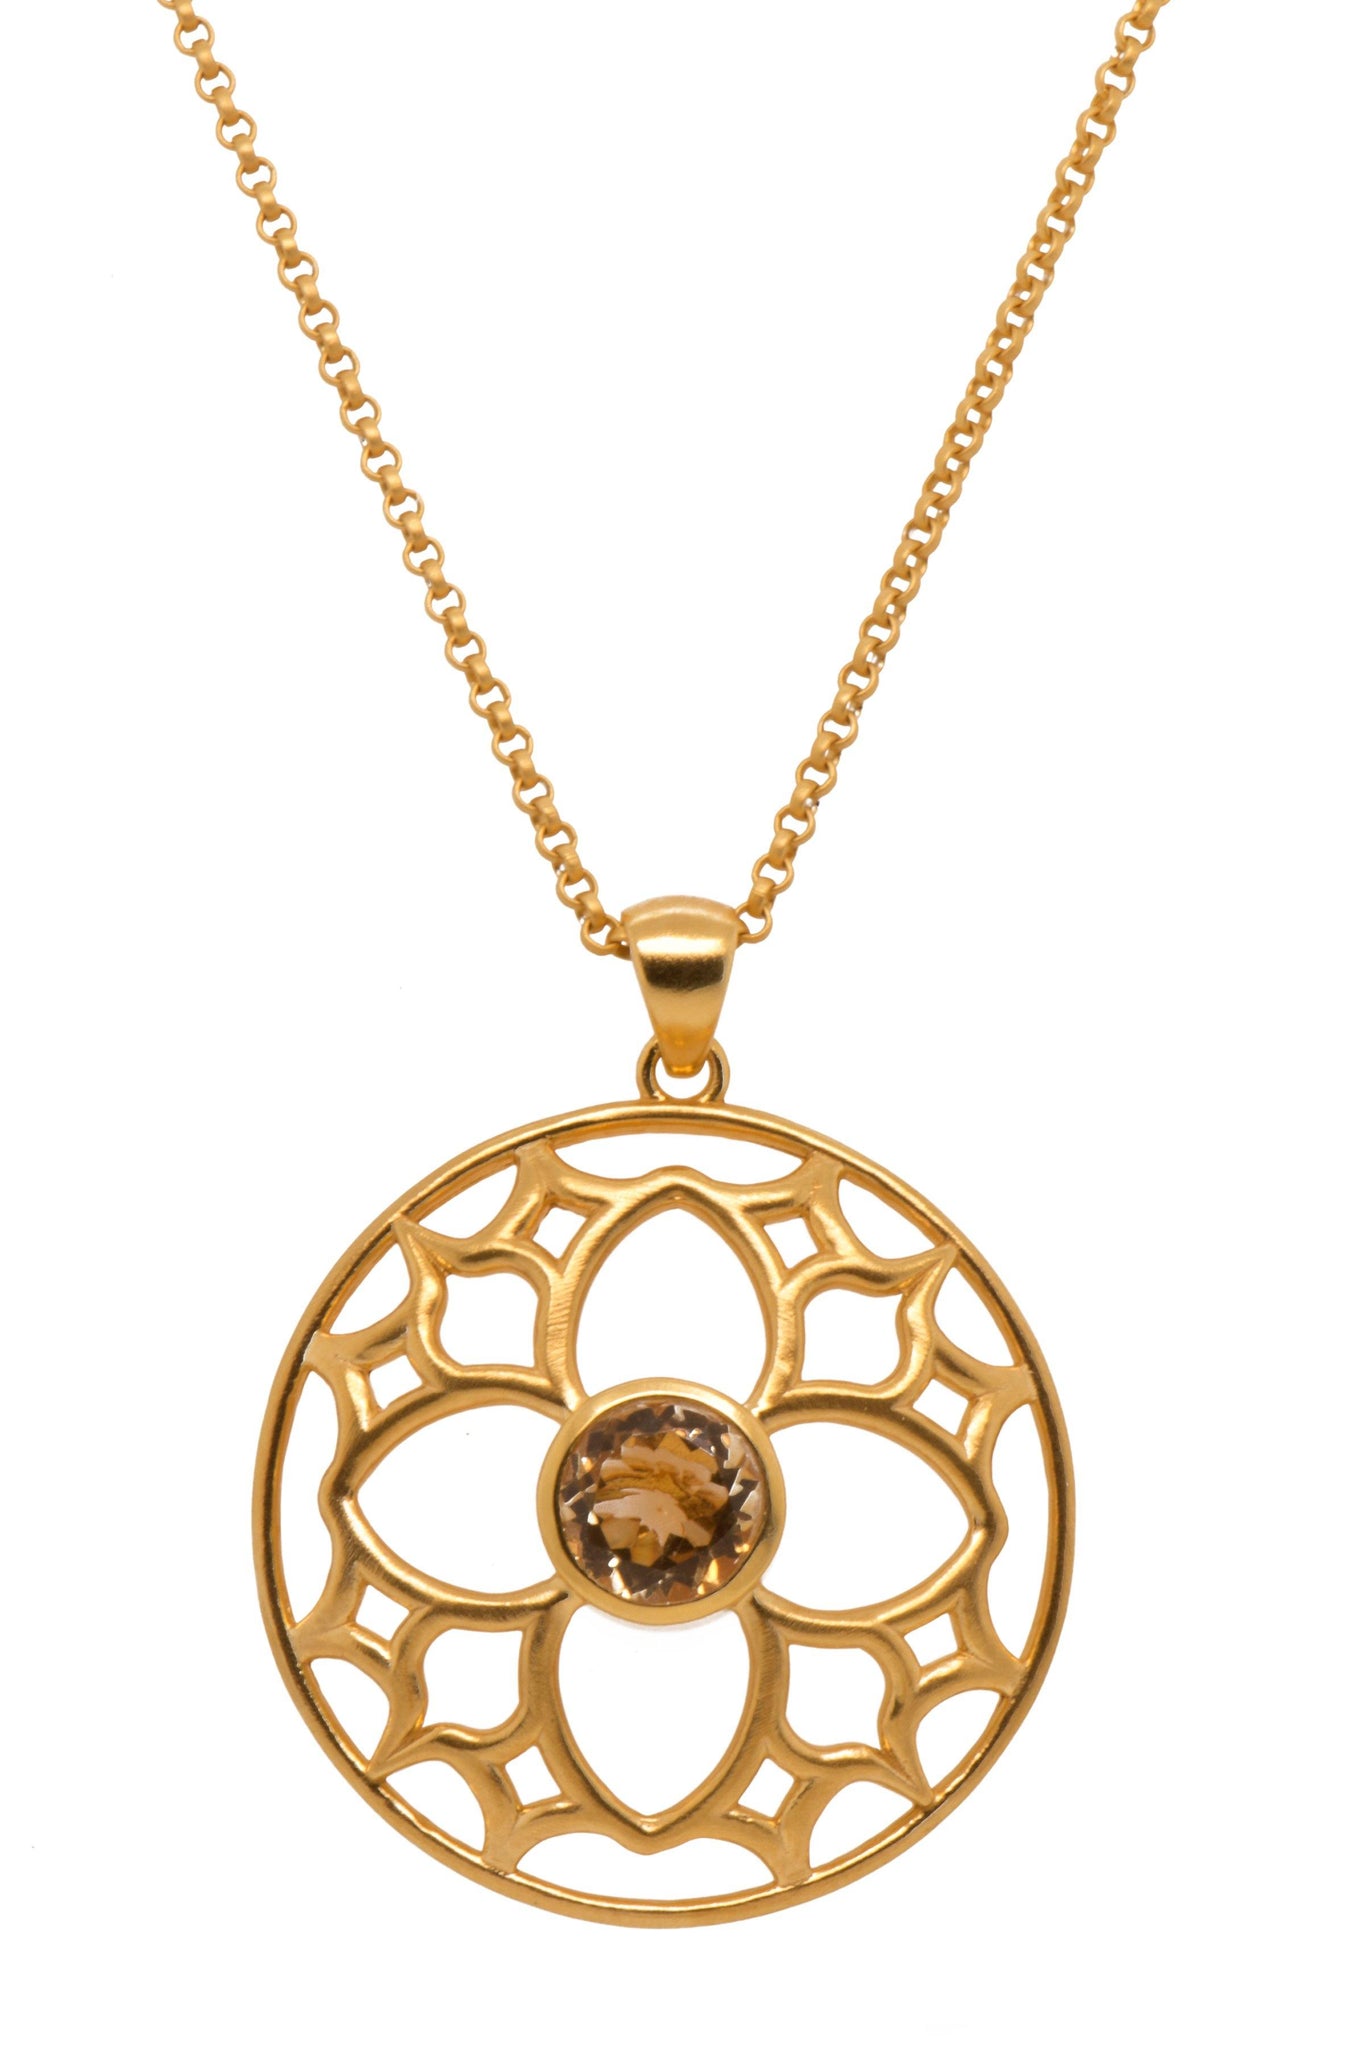 JOYFUL CIRCLE PENDANT 40MM CITRINE 24K GOLD VERMEIL - Joyla Jewelry